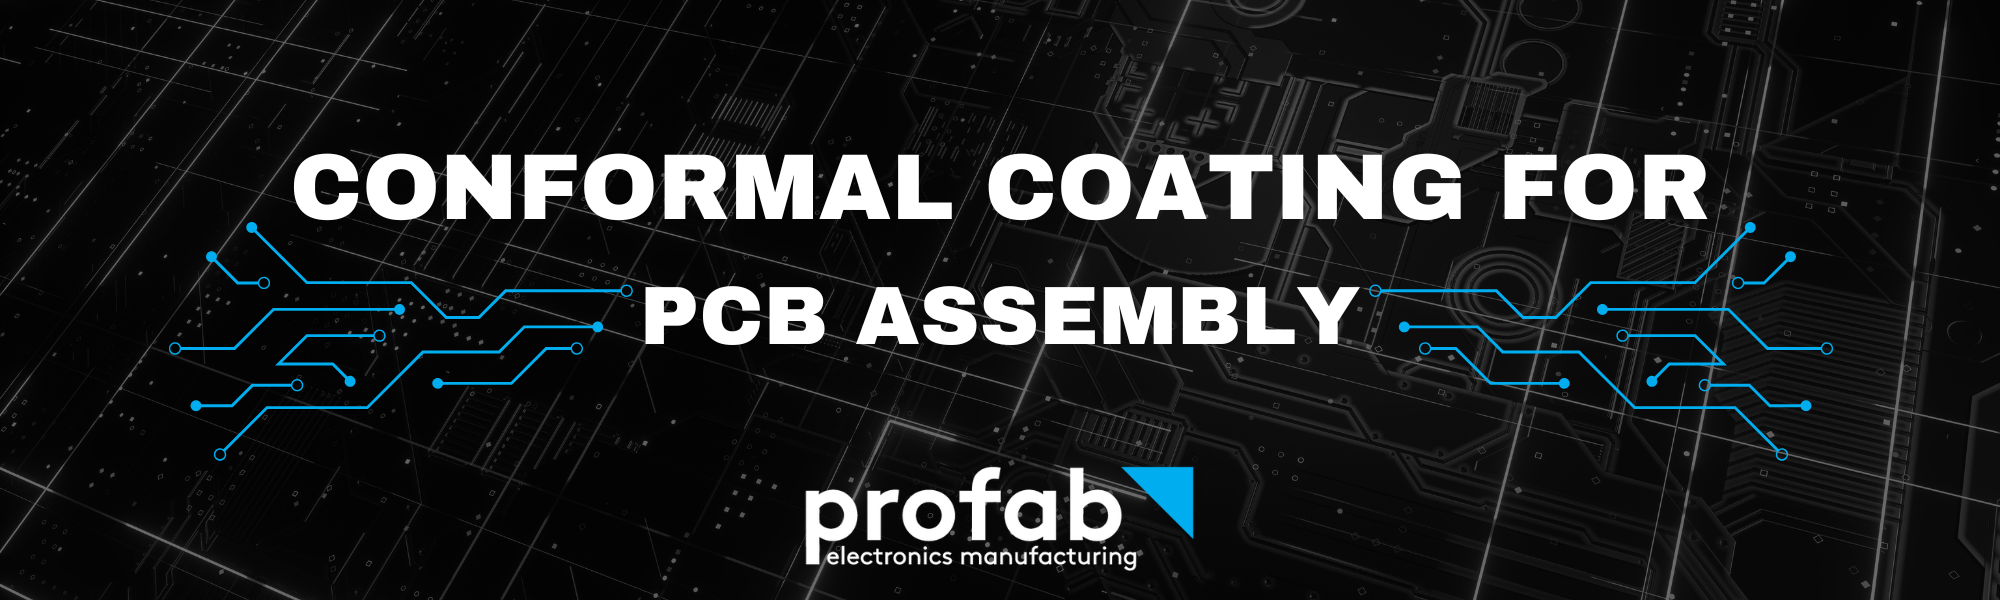 PCB Assembly Conformal Coating